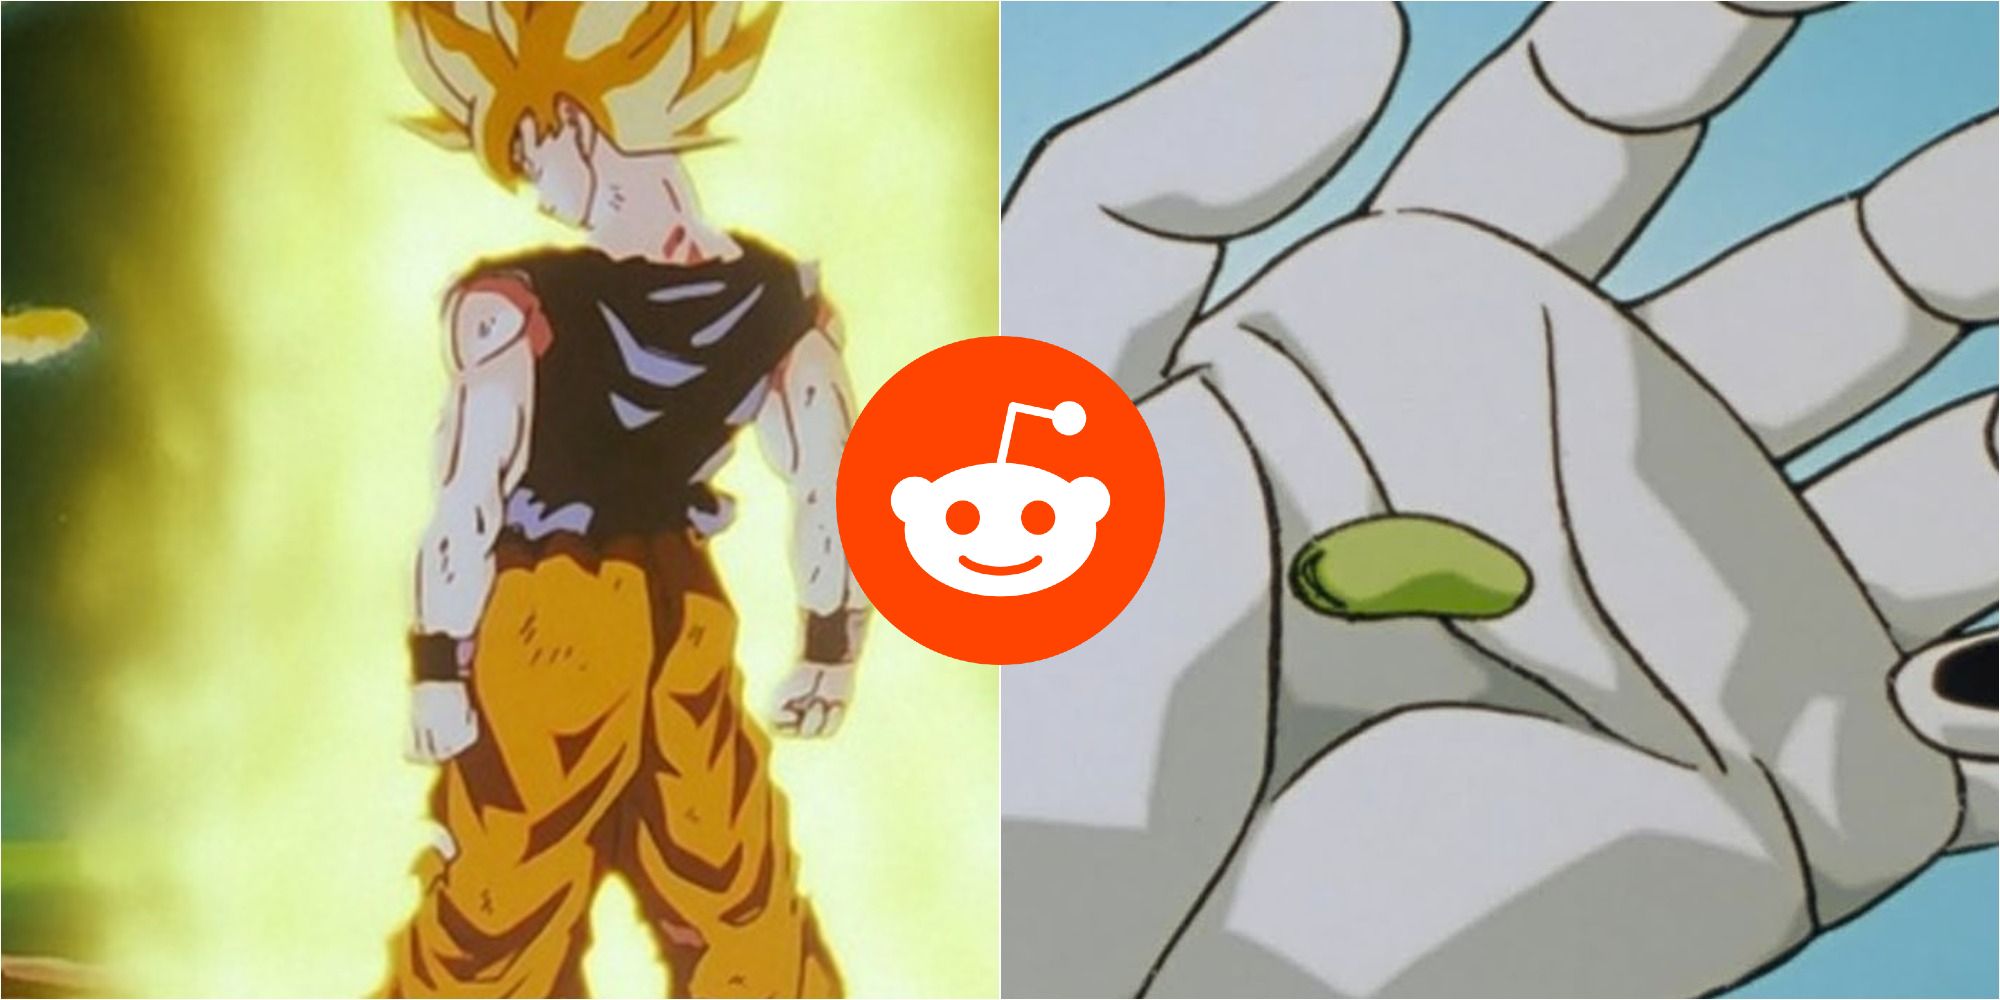 Dragon Ball Featured Split Image With Super Saiyan Goku, Cell Holding Senzu Beans, and Reddit Logo